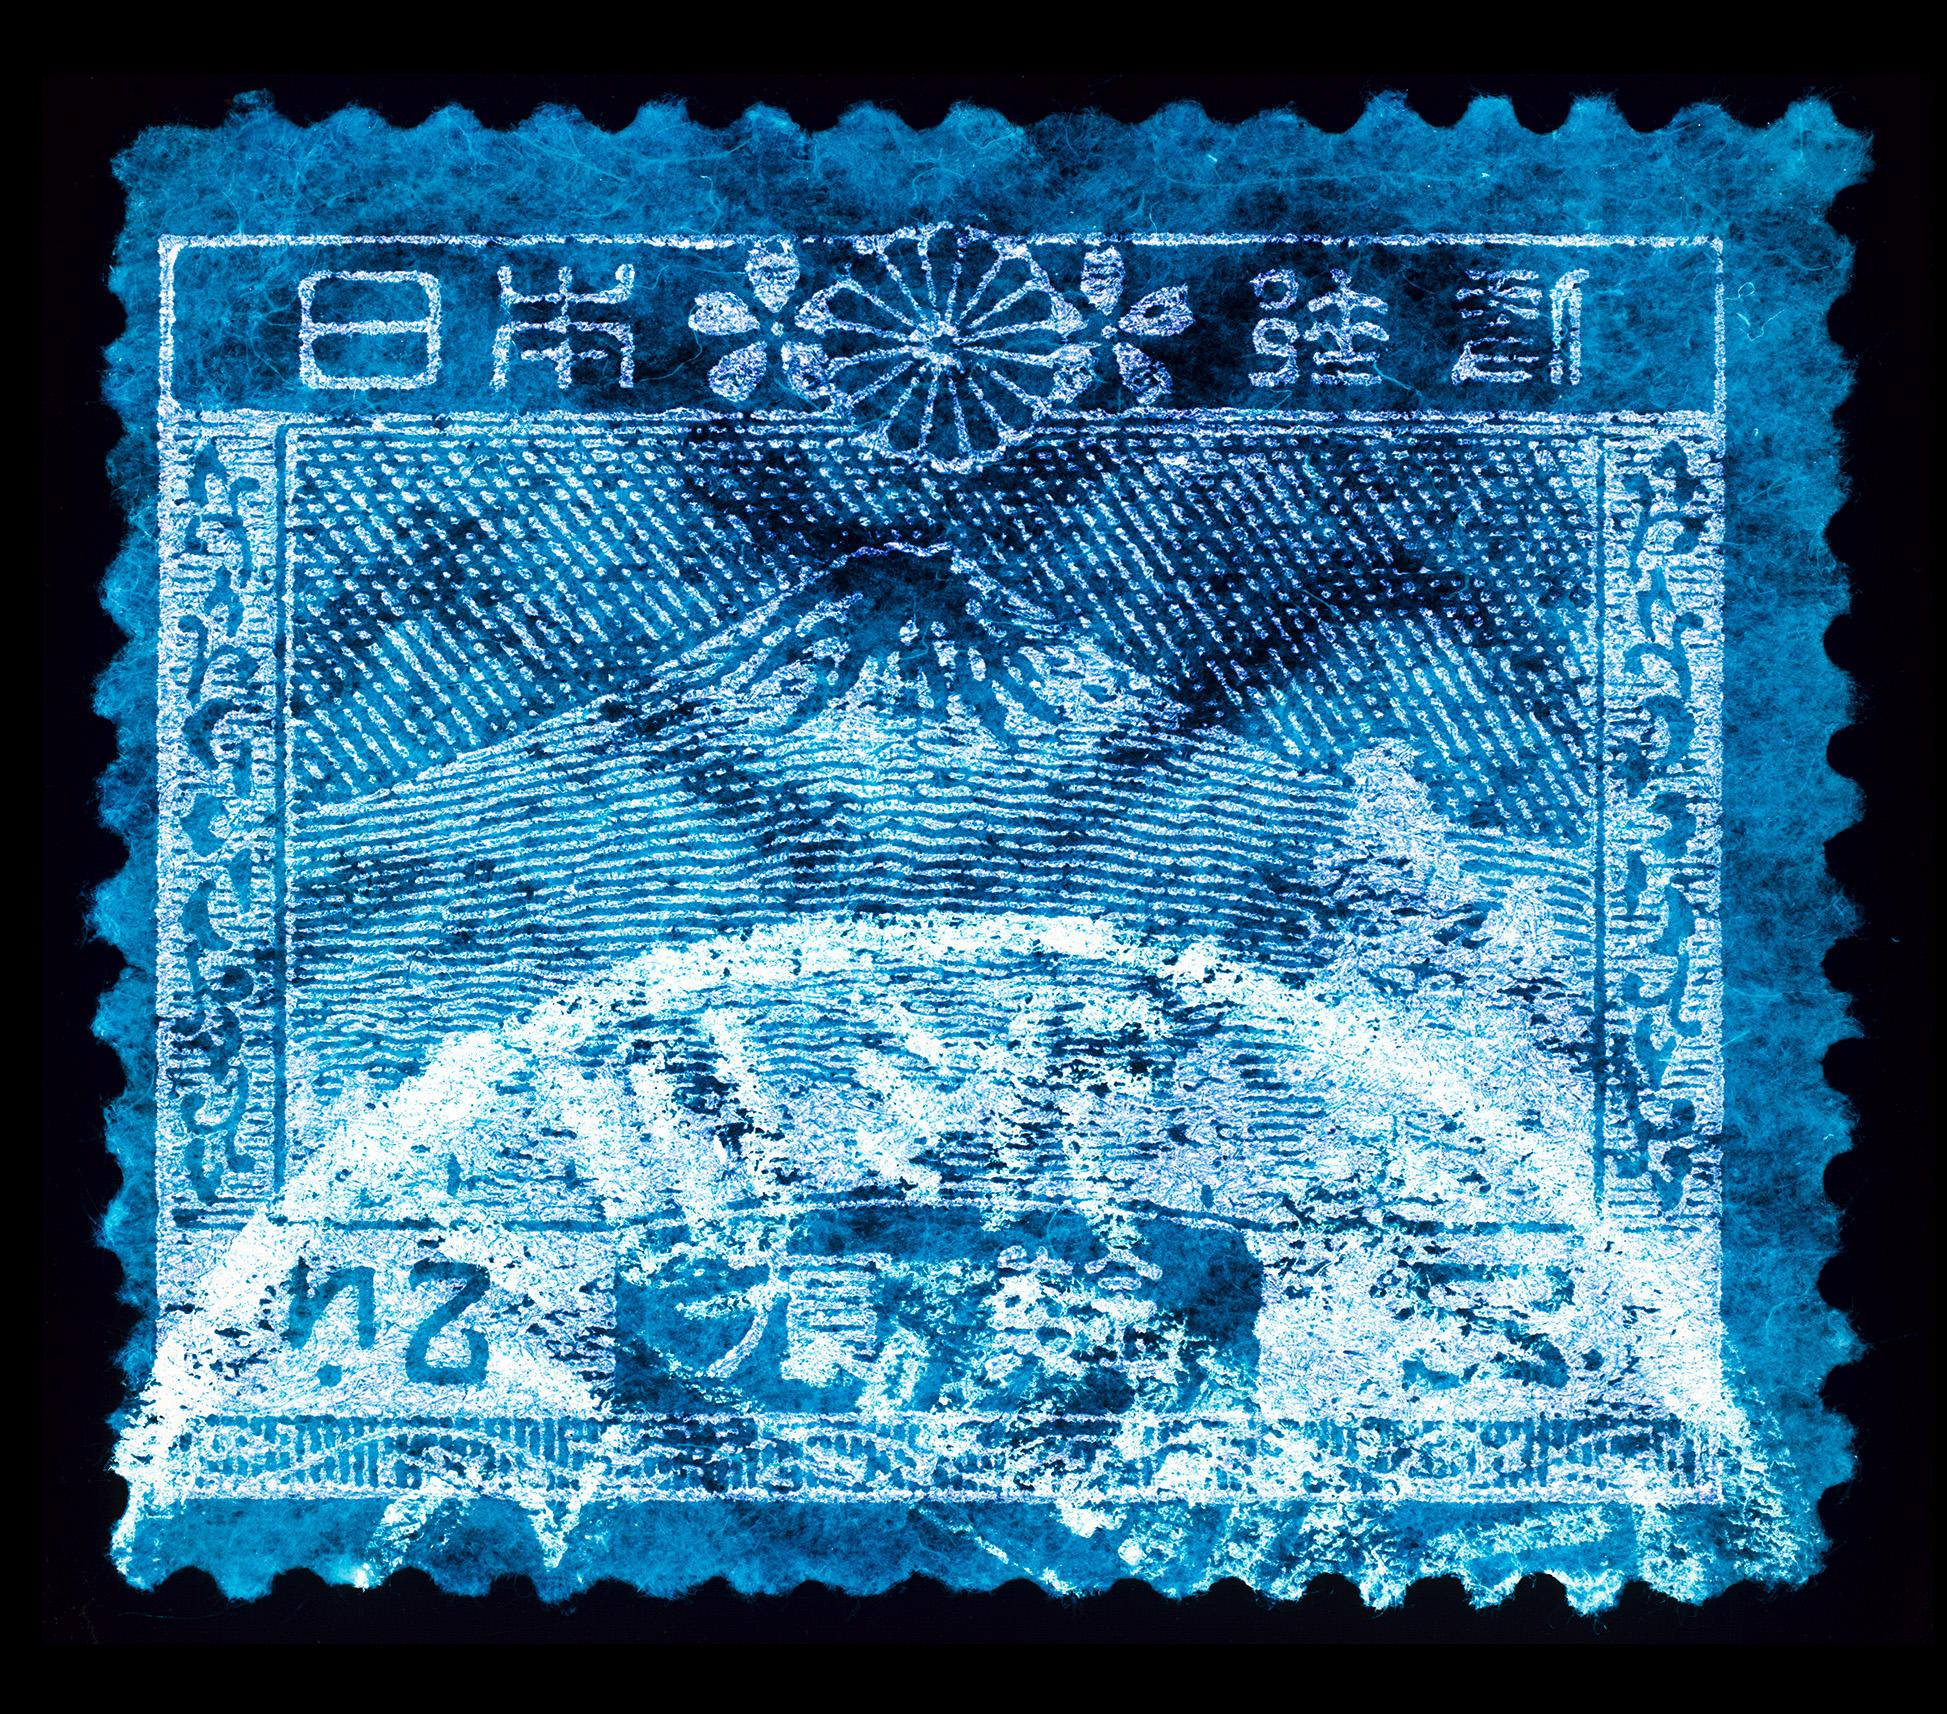 Heidler & Heeps Landscape Photograph - Japapese Stamp Collection 'Mount Fuji' - Conceptual Pop Art Color Photography